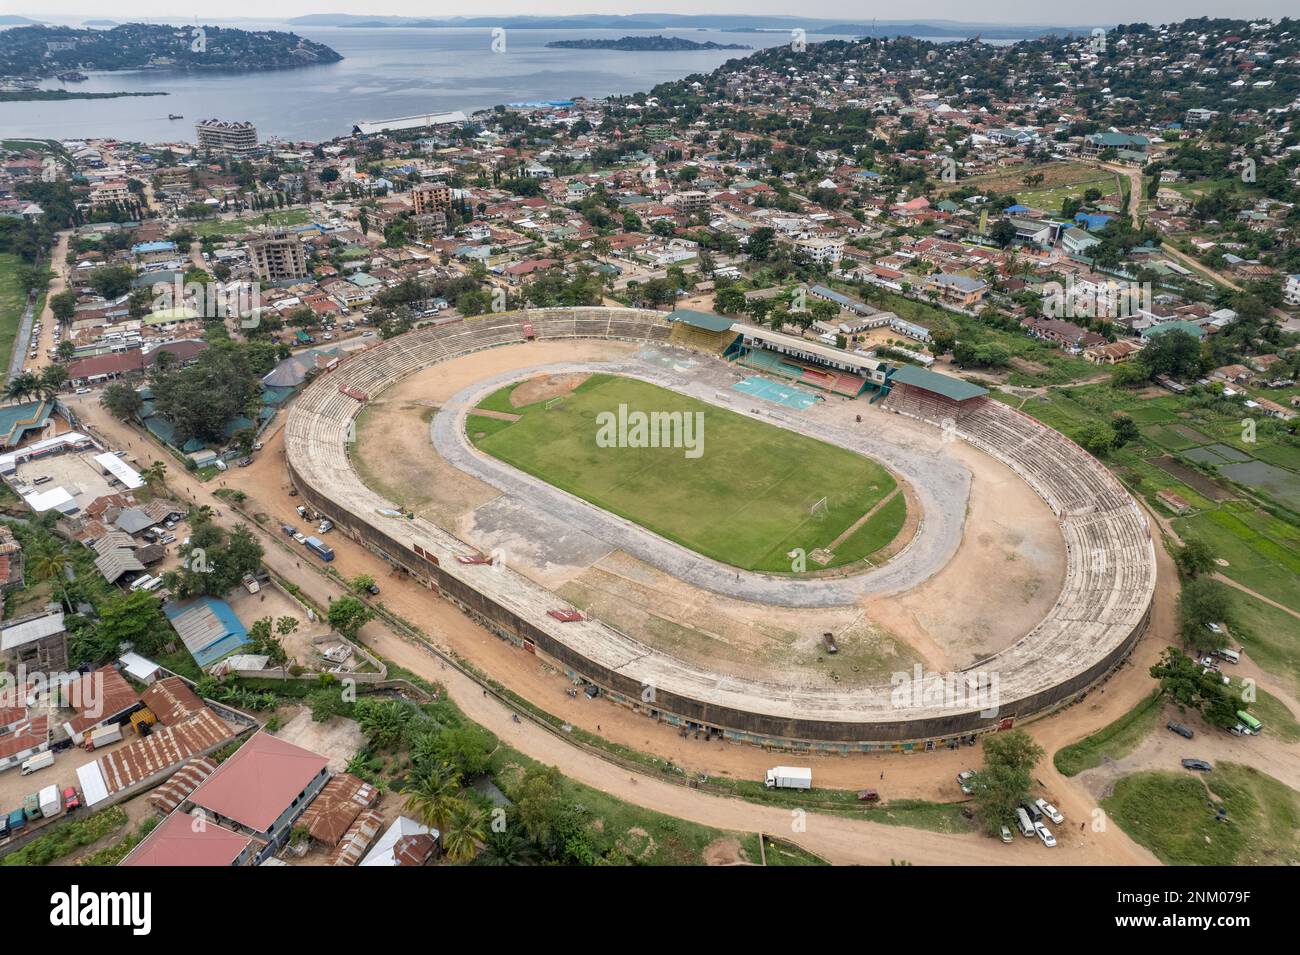 mwanza-tanzania-02222023-aerial-view-of-the-ccm-kirumba-stadium-next-to-lake-victoria-2NM079F.jpg